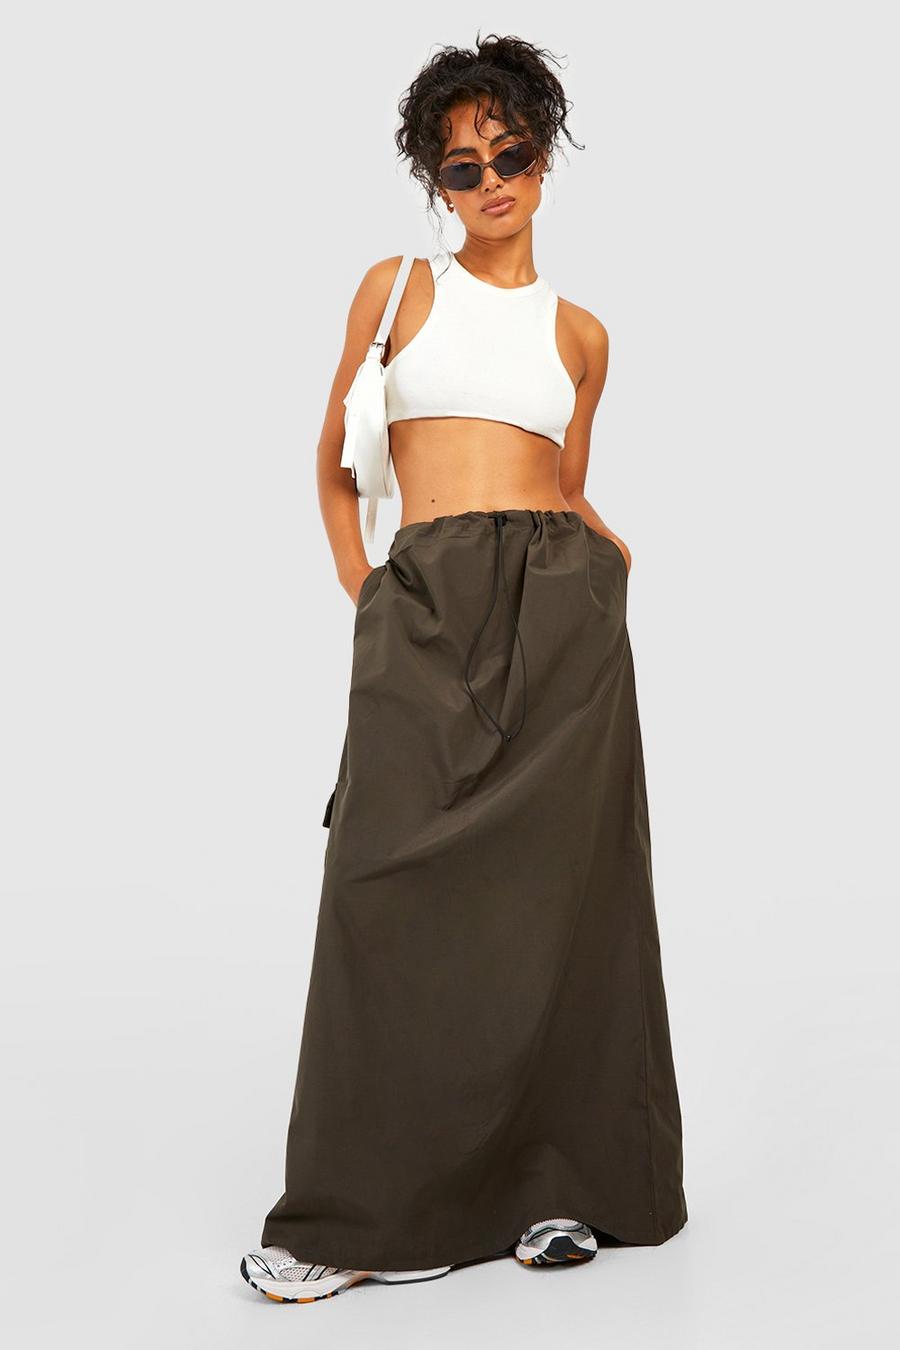 UHUYA Womens Cargo Skirt Midi Long Skirts High Waisted Pencil Skirt Maxi  Cargo Skirt Spring and Summer Denim Work Dress Pocket Skirt Casual  Mid-length Skirt Khaki A L 